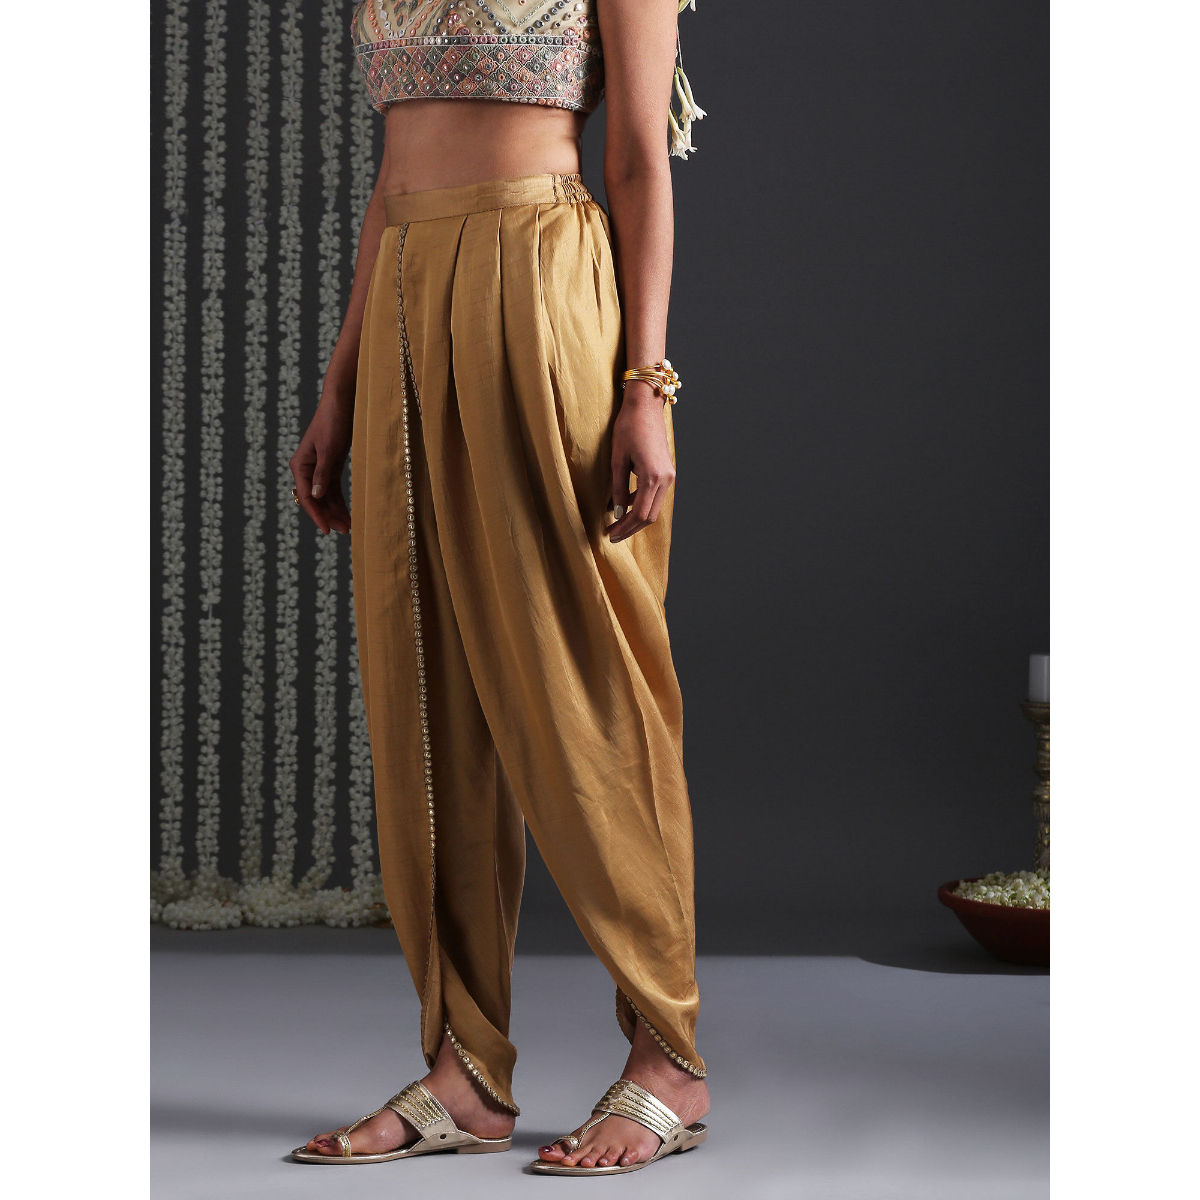 Plus Size Women's Loose Yoga Floral Print Baggy Loose Harem Pants Indian  Style High Waist Wide Legs Pants - Walmart.com